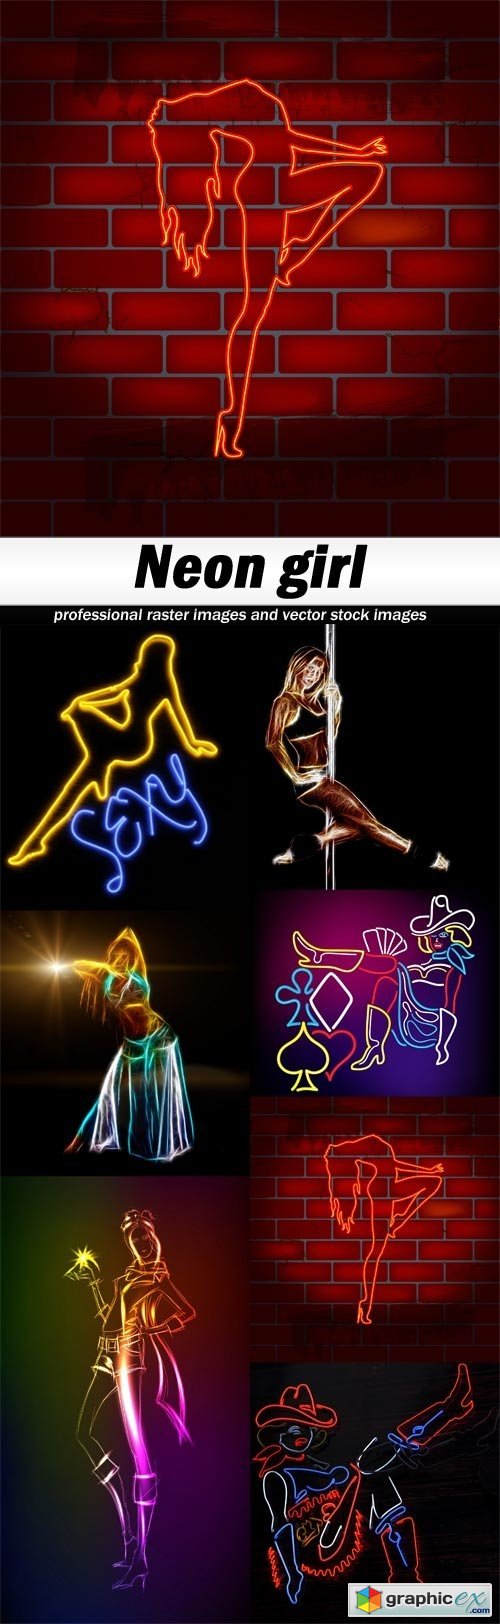 Neon girl